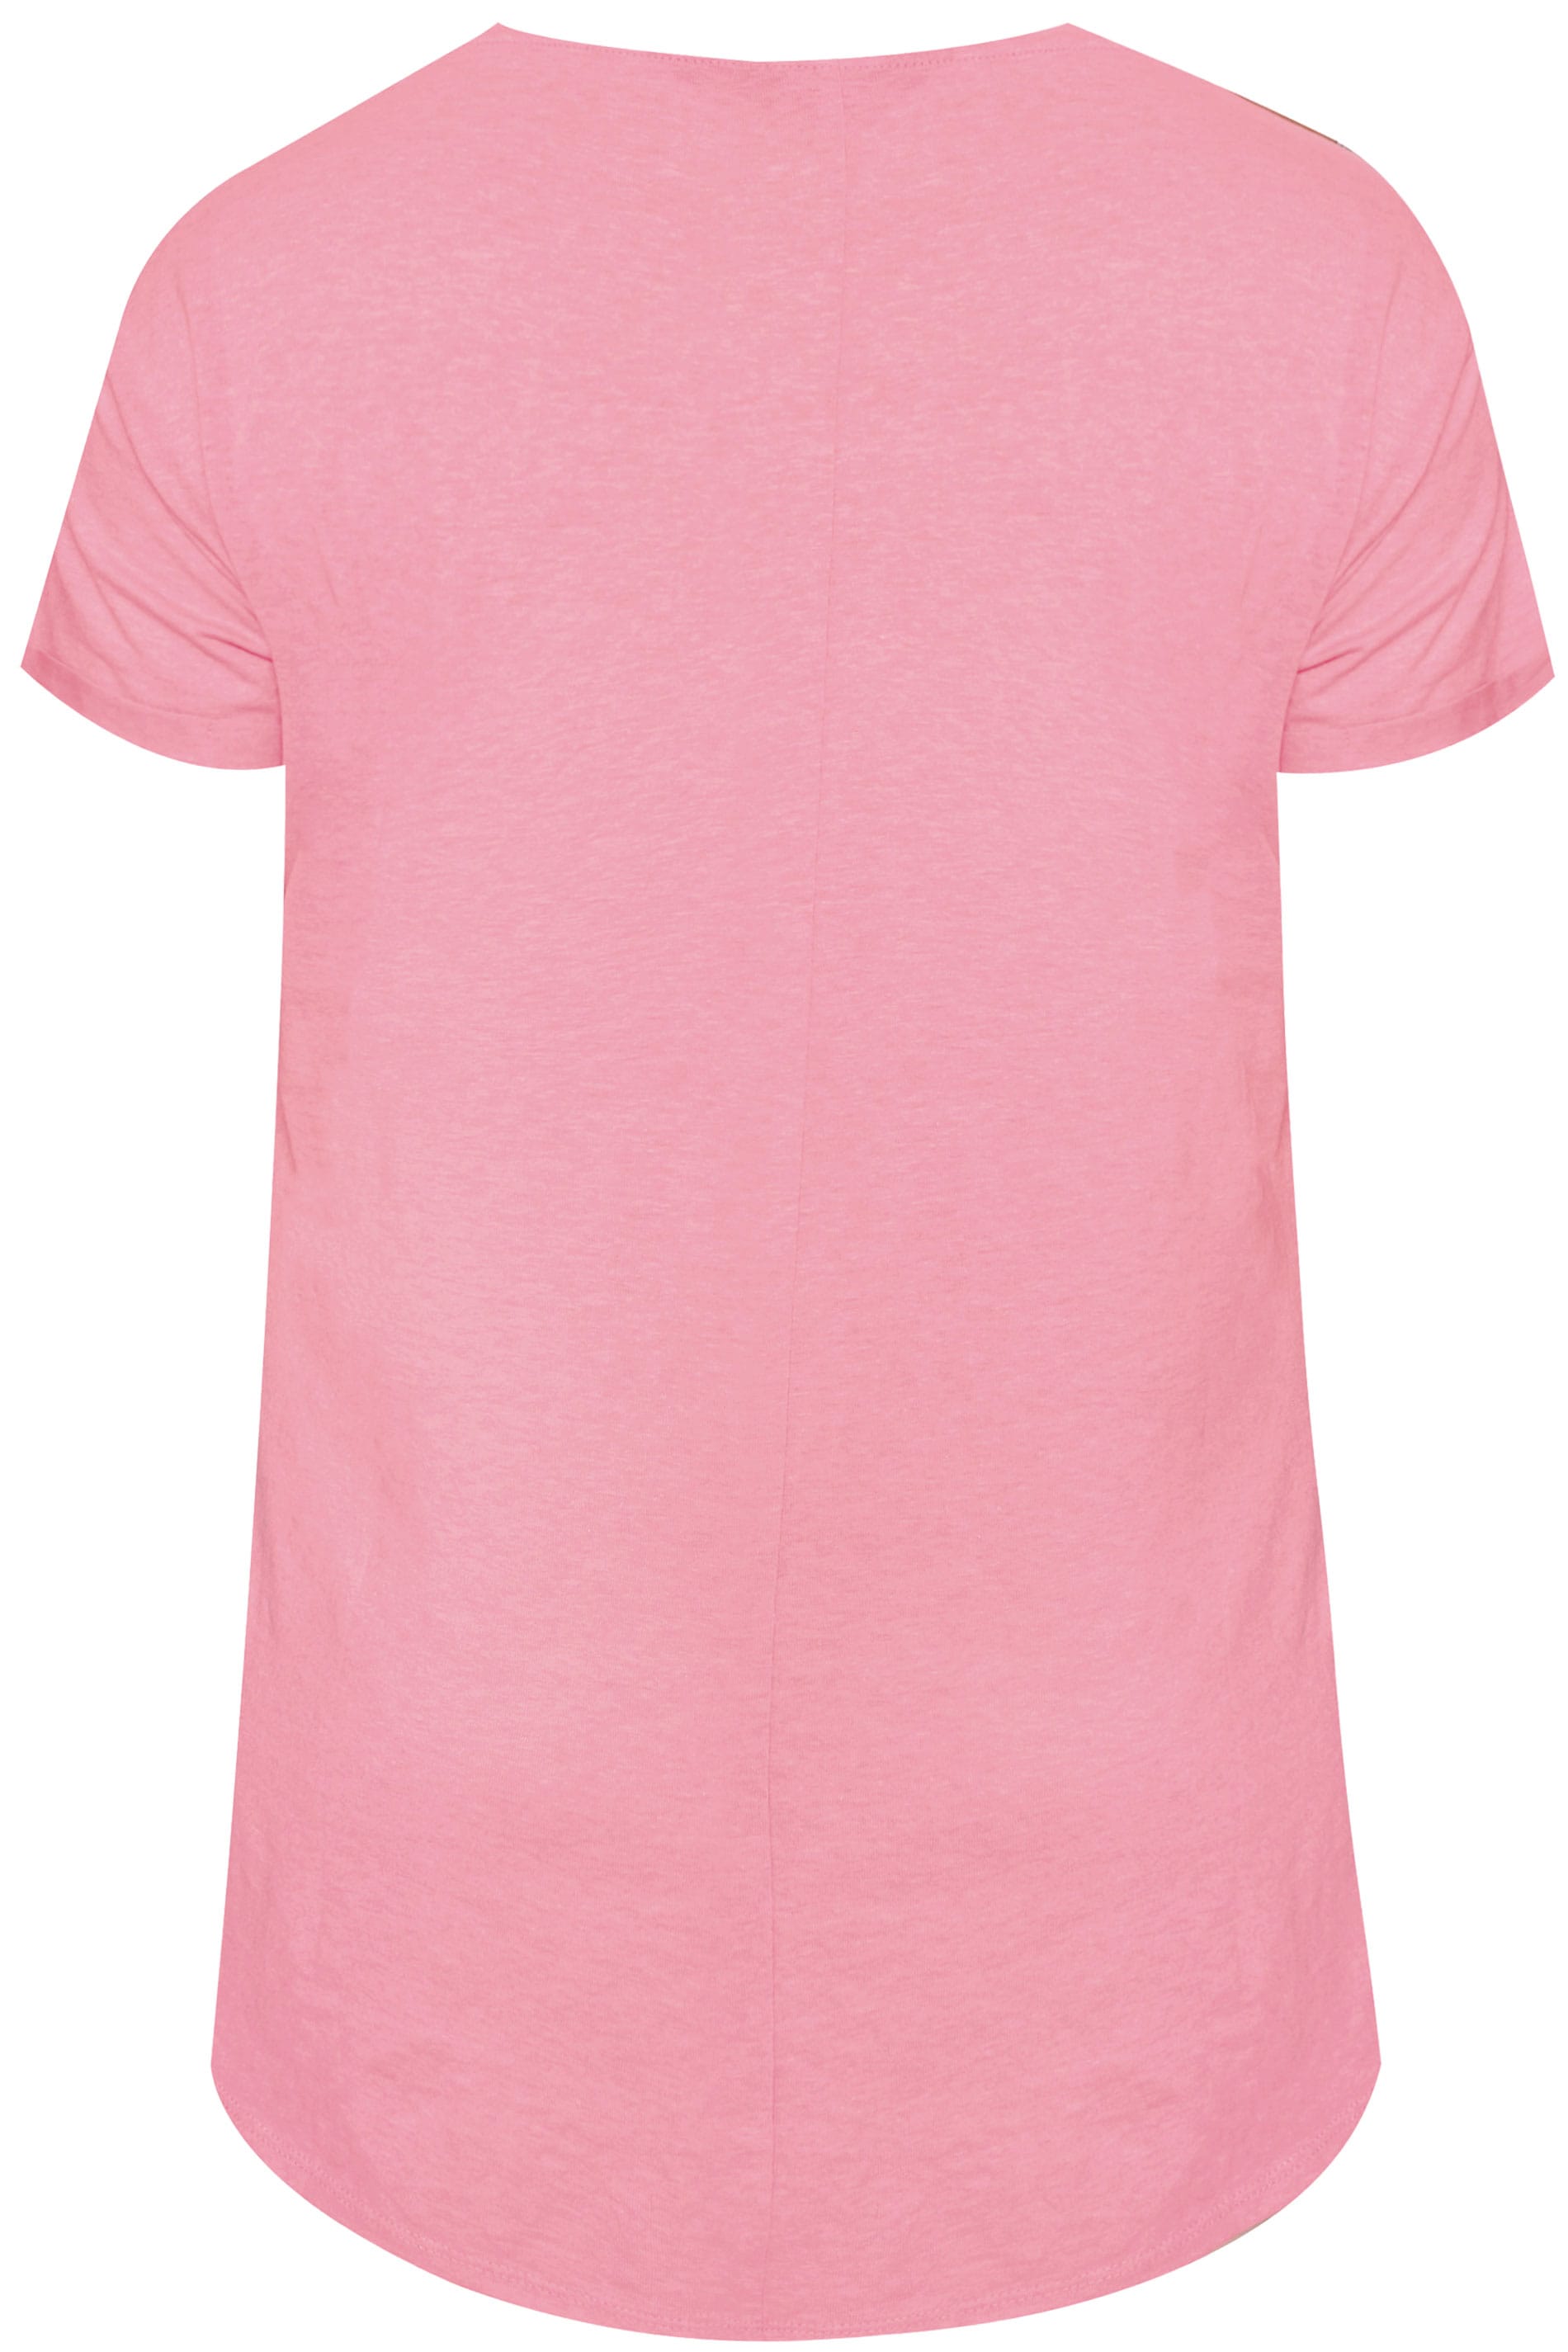 Download Pink Mock Pocket T-Shirt, plus size 16 to 36